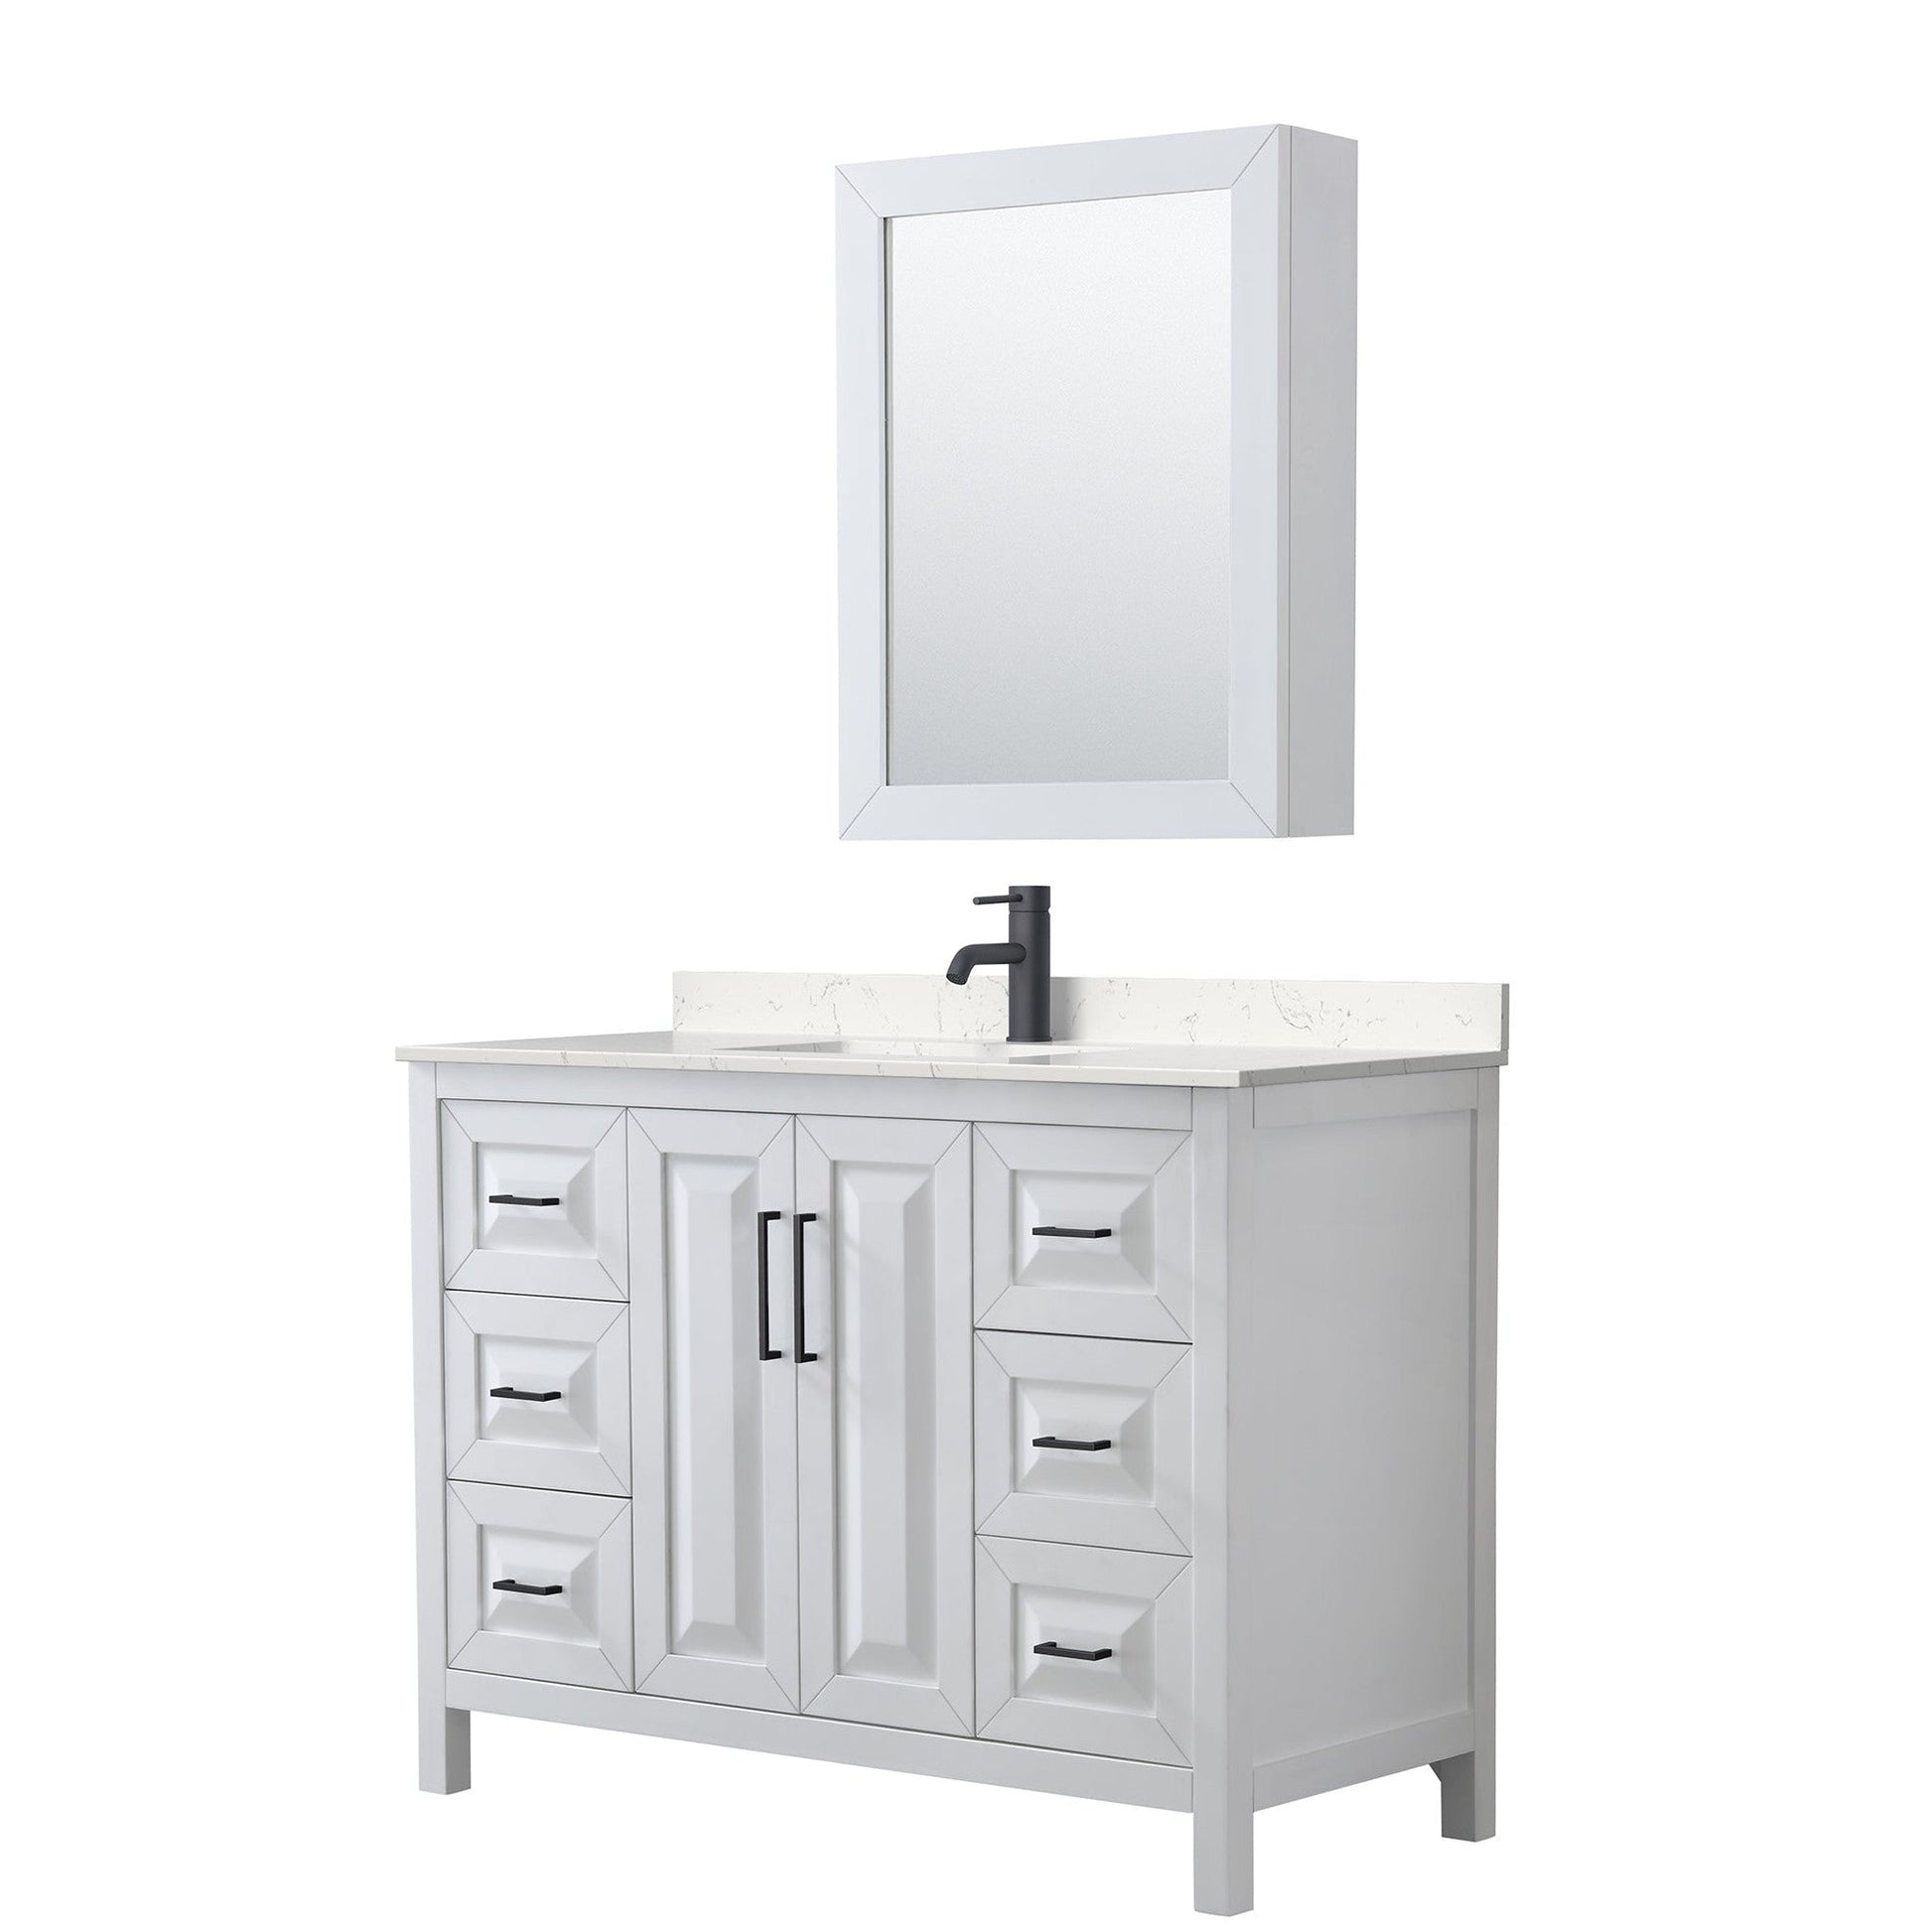 Daria 48" Single Bathroom Vanity in White, Carrara Cultured Marble Countertop, Undermount Square Sink, Matte Black Trim, Medicine Cabinet